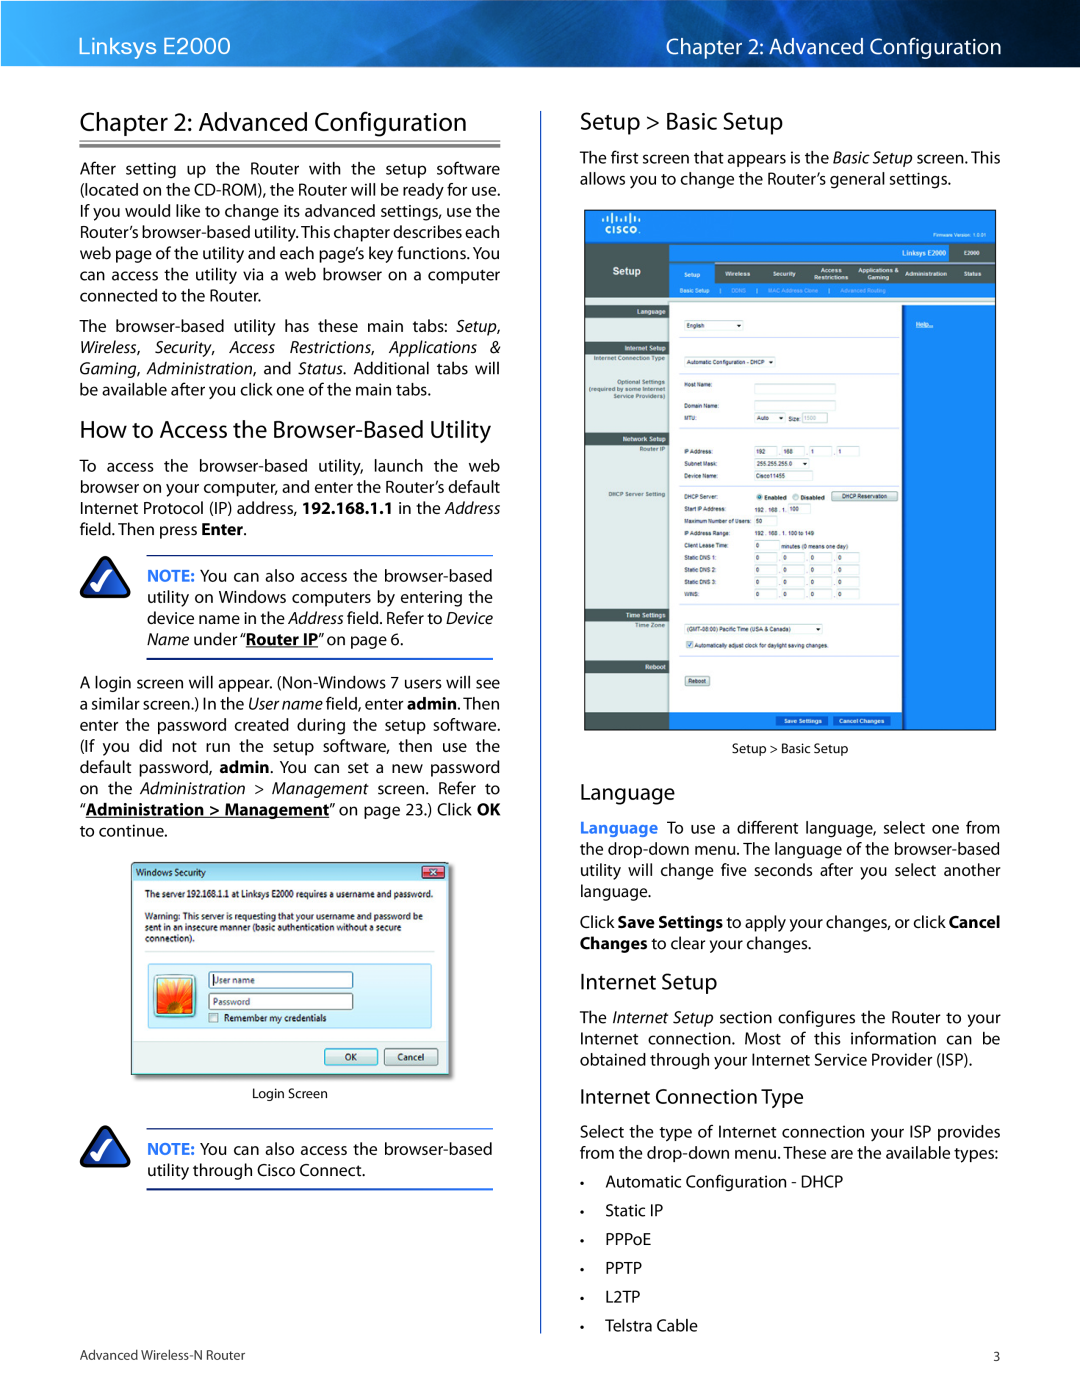 Cisco Systems E2000 manual Advanced Configuration, How to Access the Browser-Based Utility, Setup Basic Setup, Language 